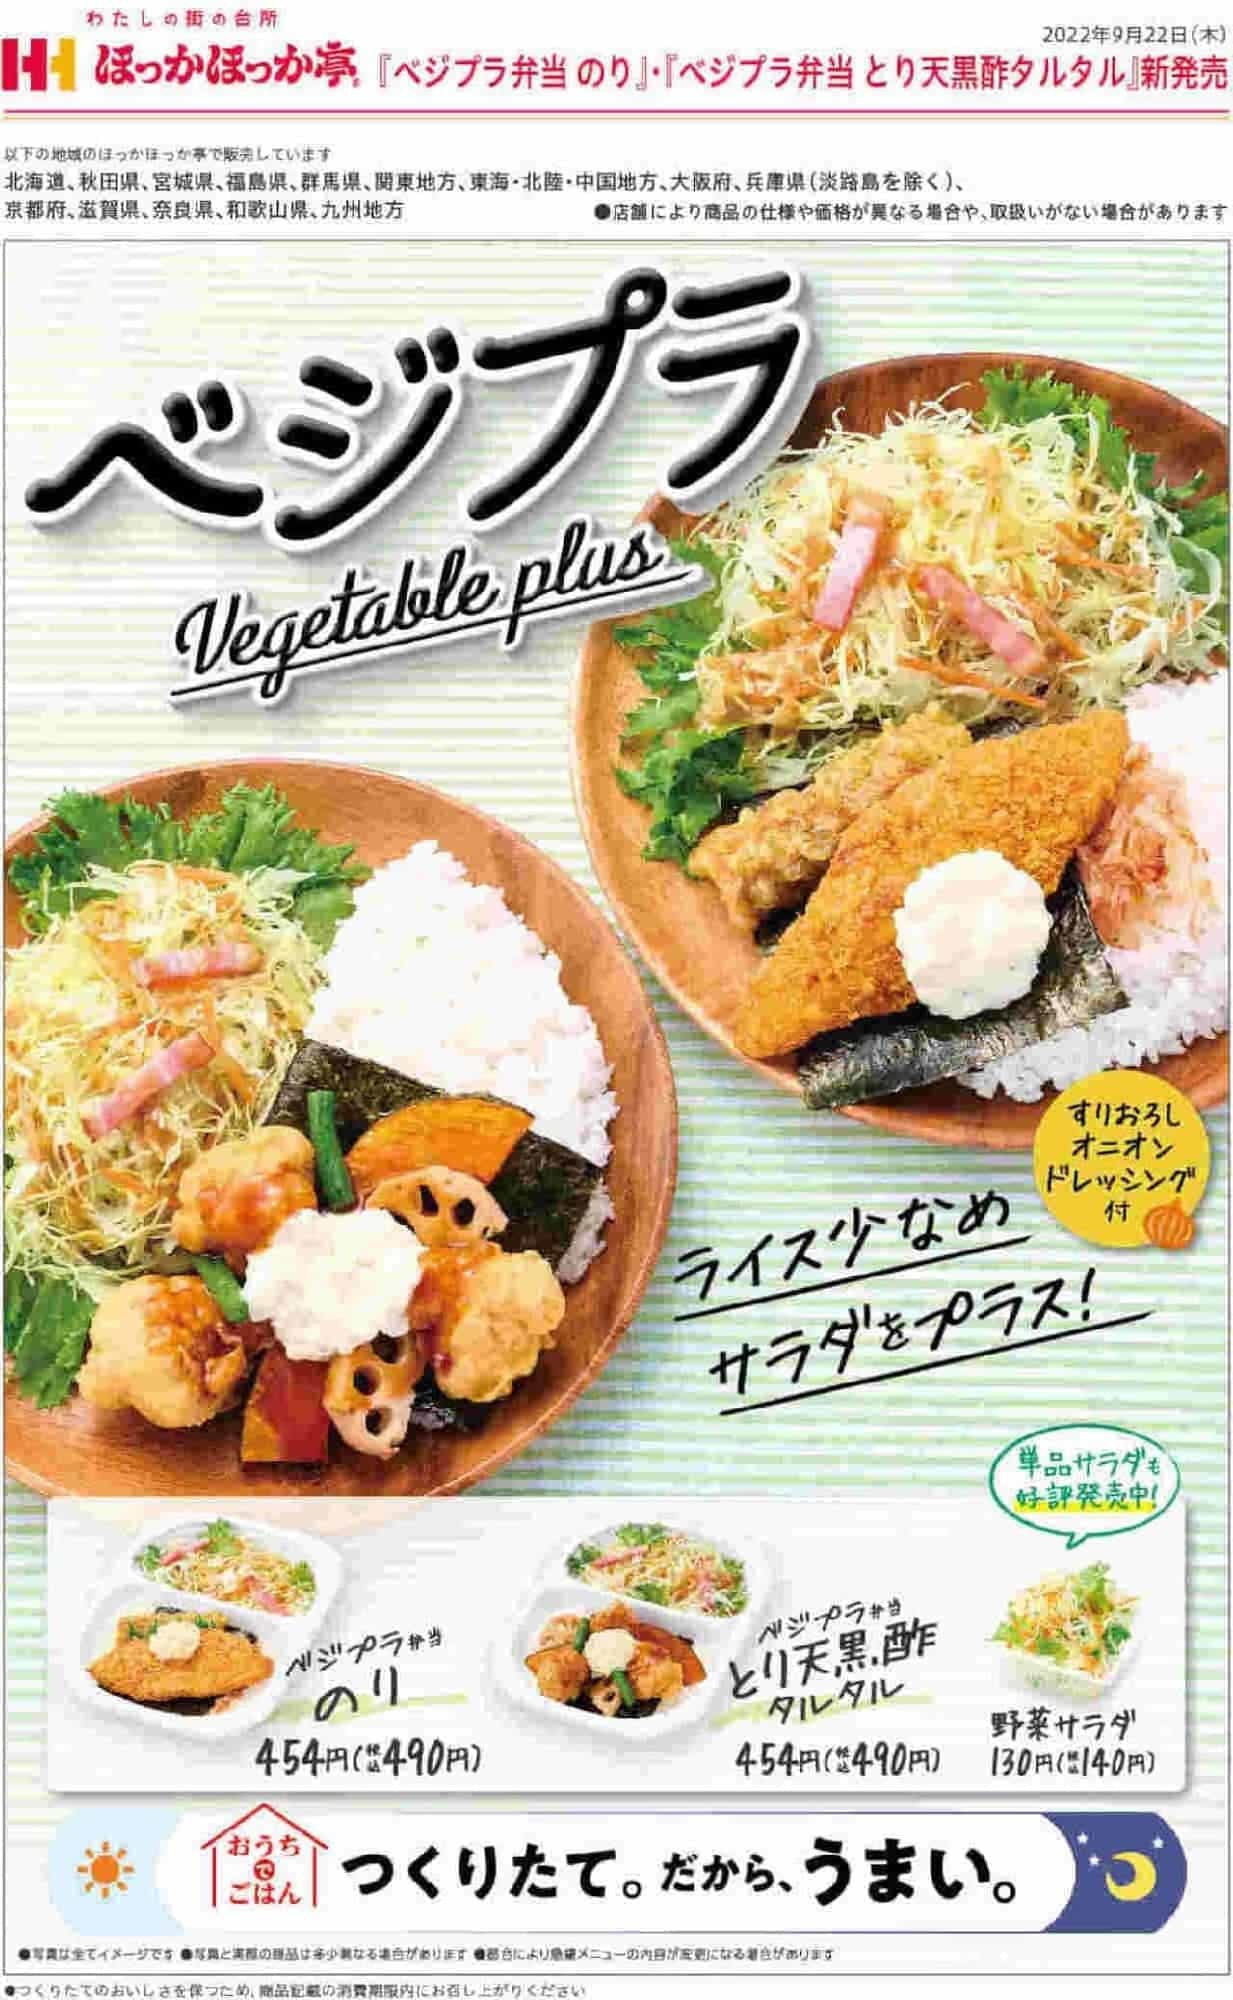 HOKKAHOKKA TEI "Veggie Pla lunch box - seaweed" "Veggie Pla lunch box - choriten with black vinegar tartar